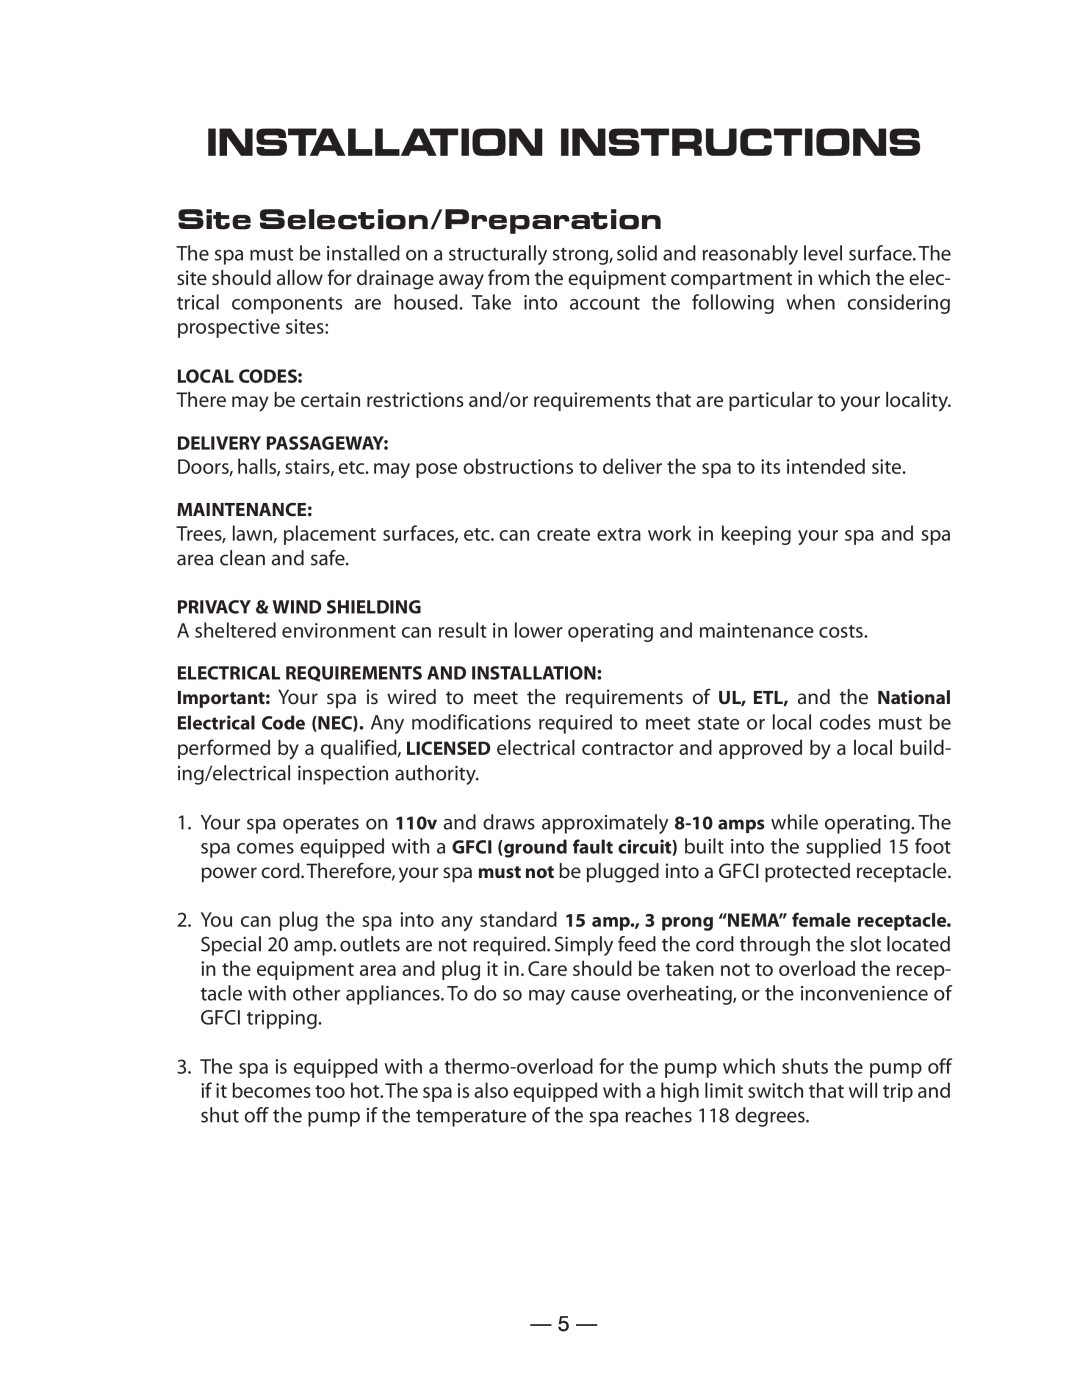 Vita Spa LD-15 Series manual Installation Instructions, Site Selection/Preparation 